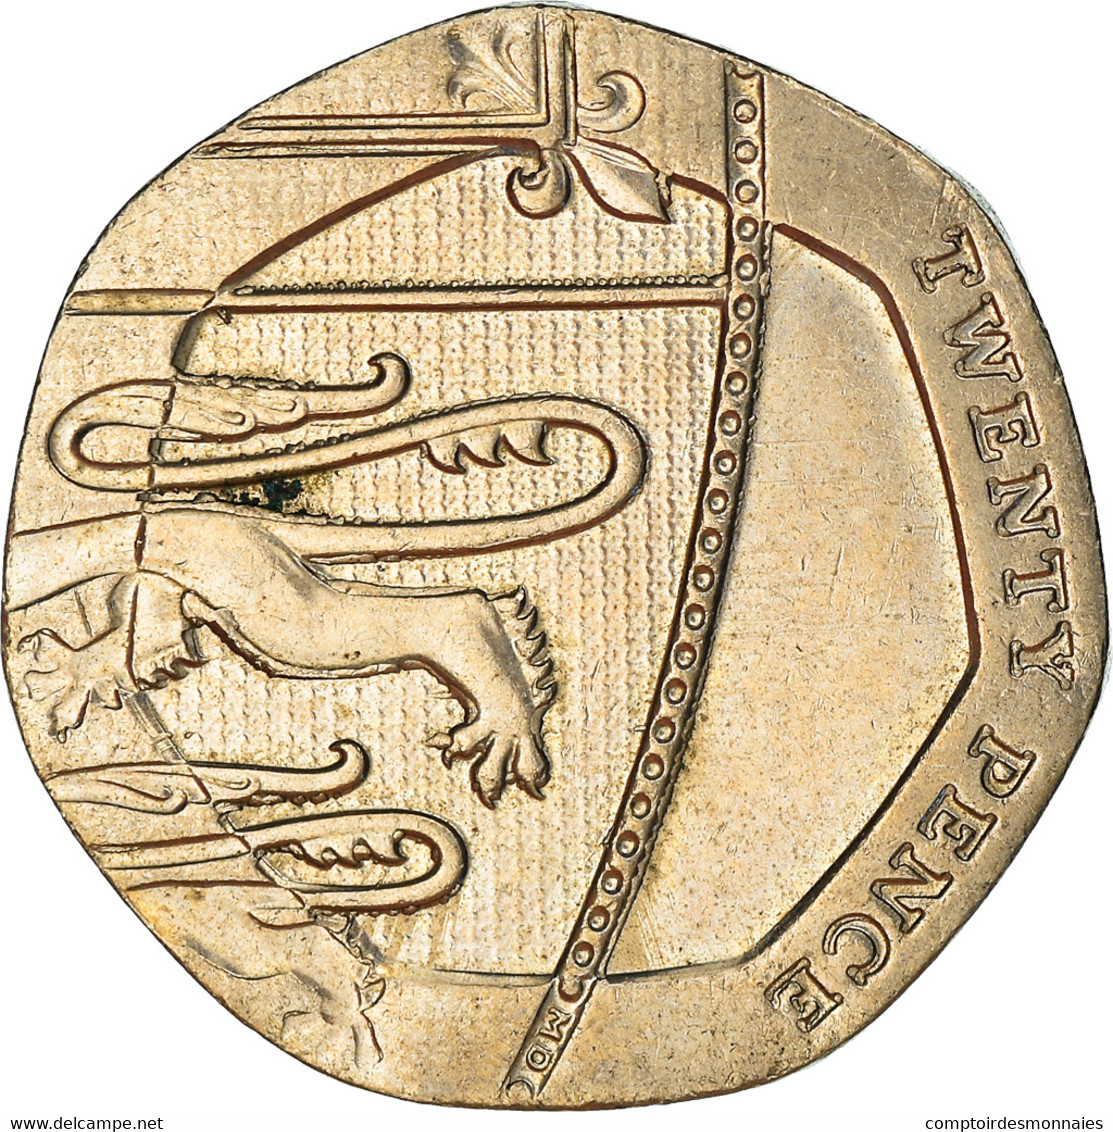 Monnaie, Grande-Bretagne, 20 Pence, 2014, TTB, Cupro-nickel - 20 Pence